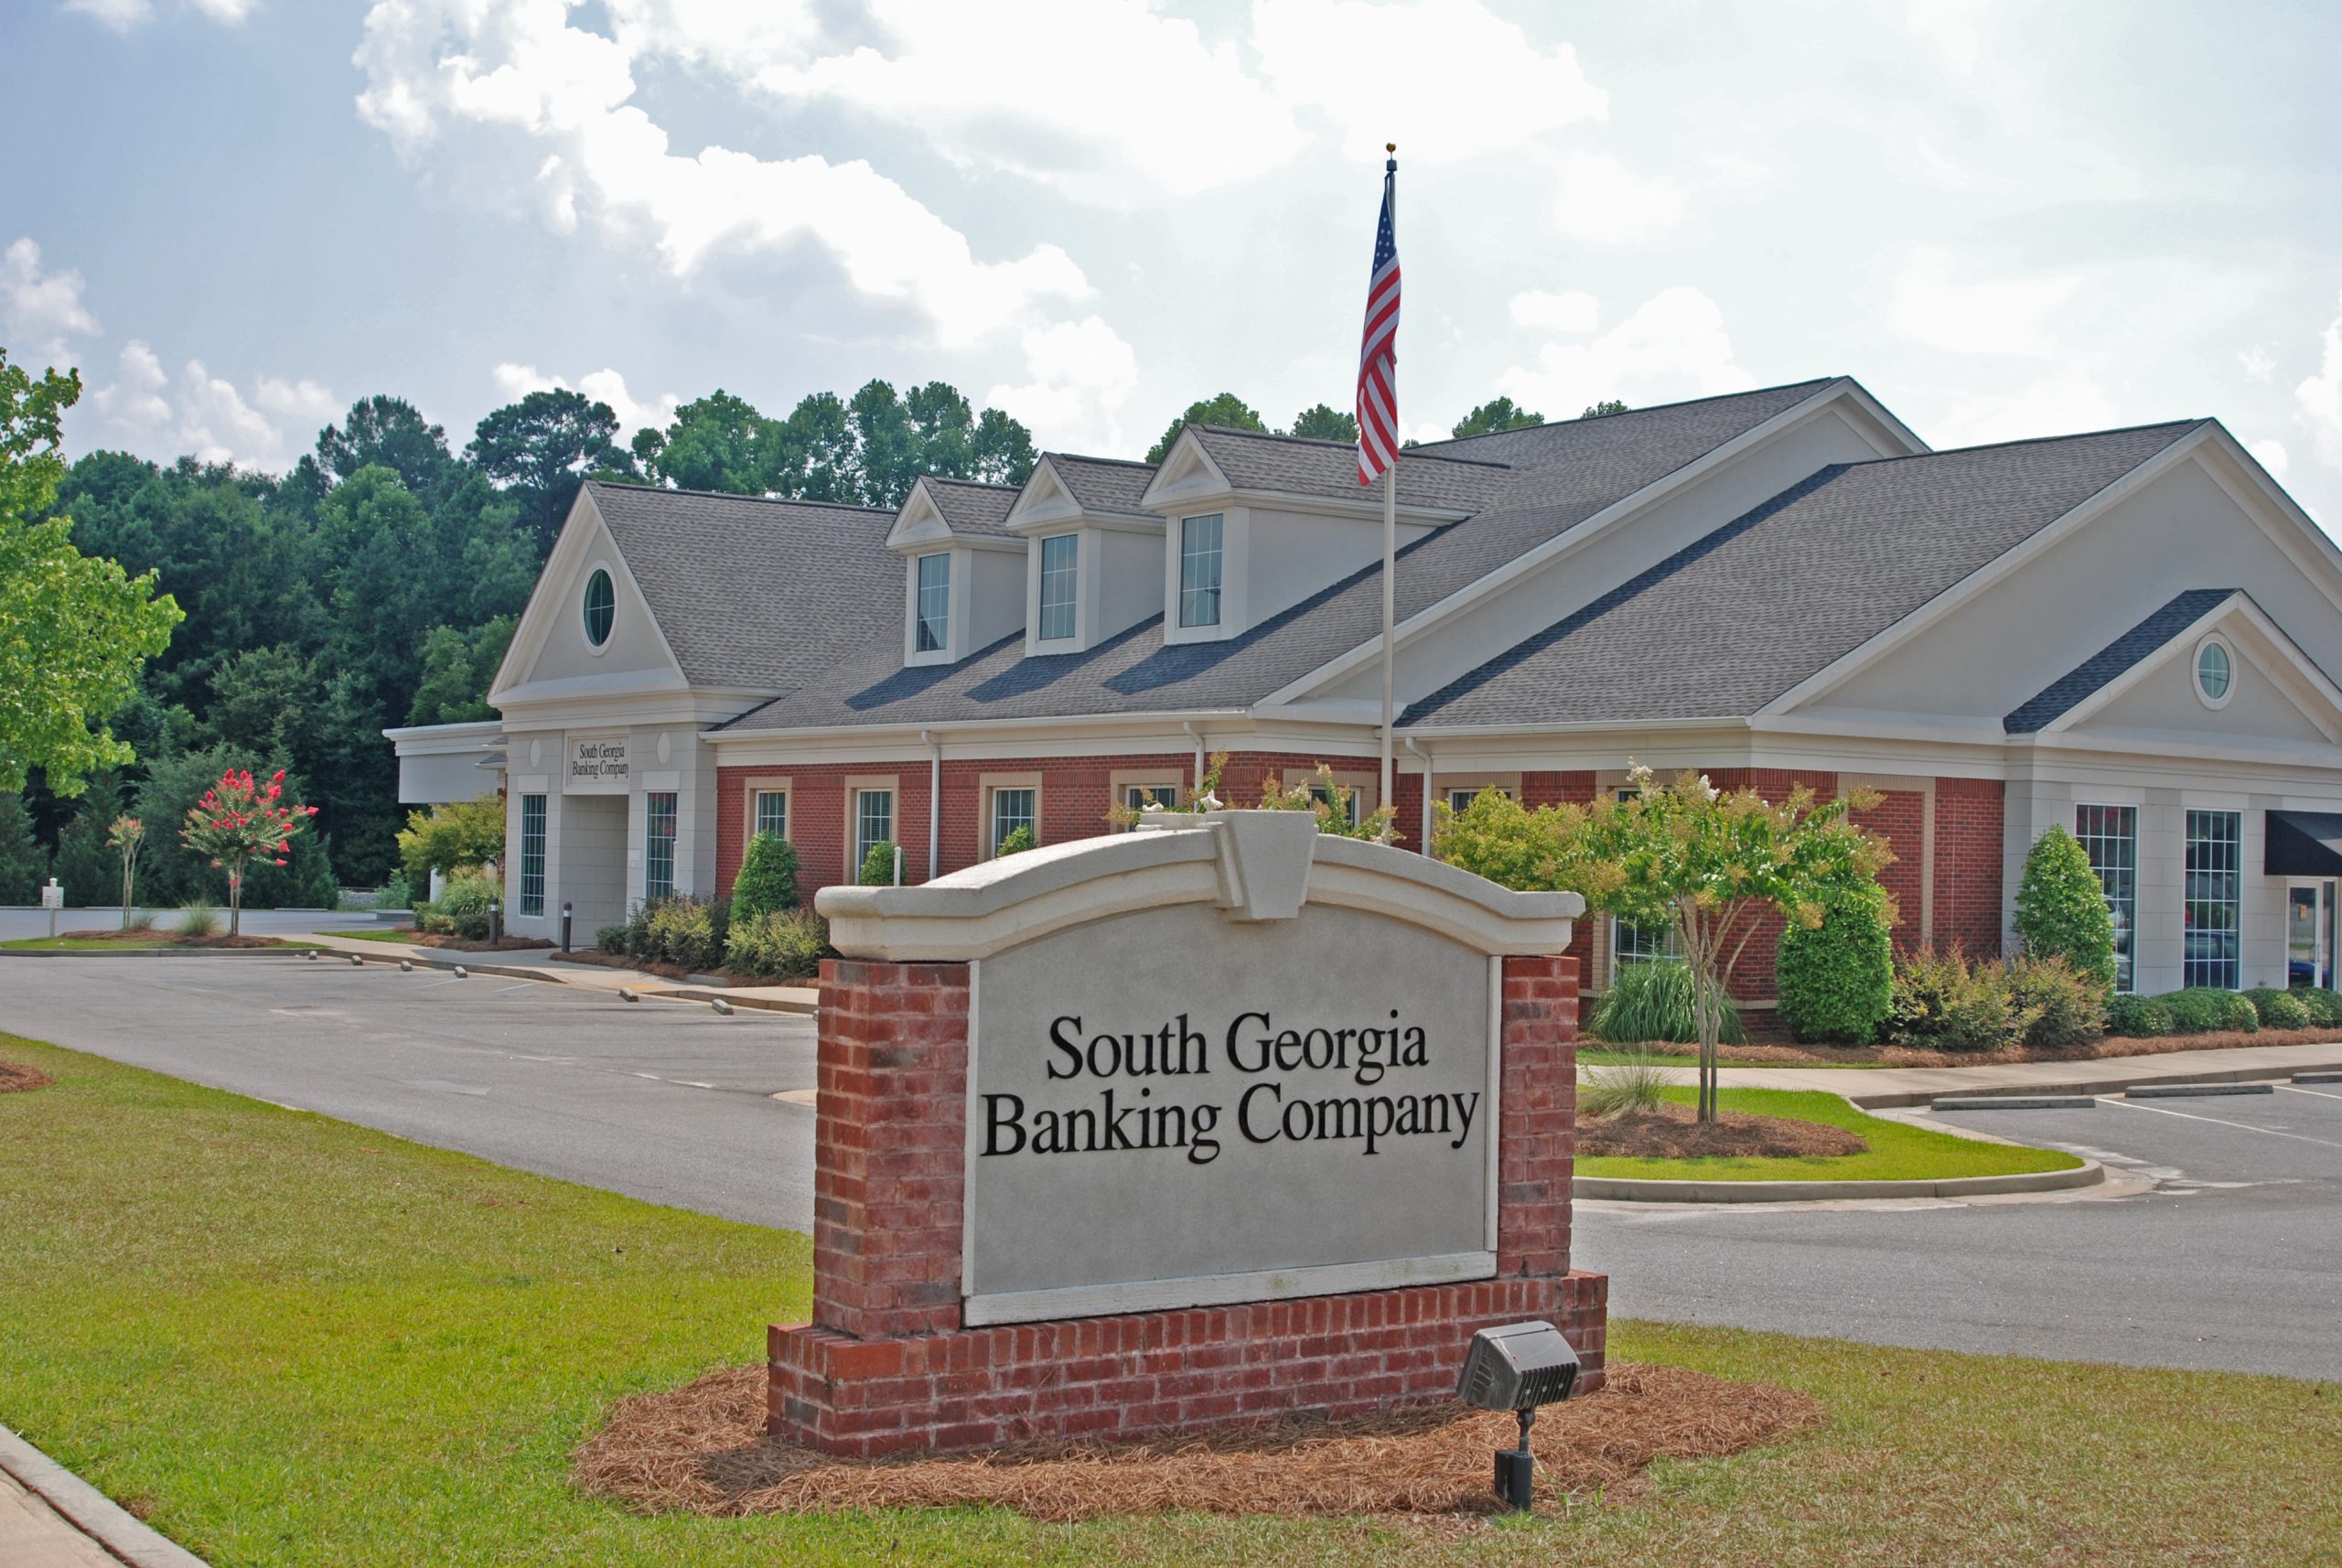 South Georgia Banking Company